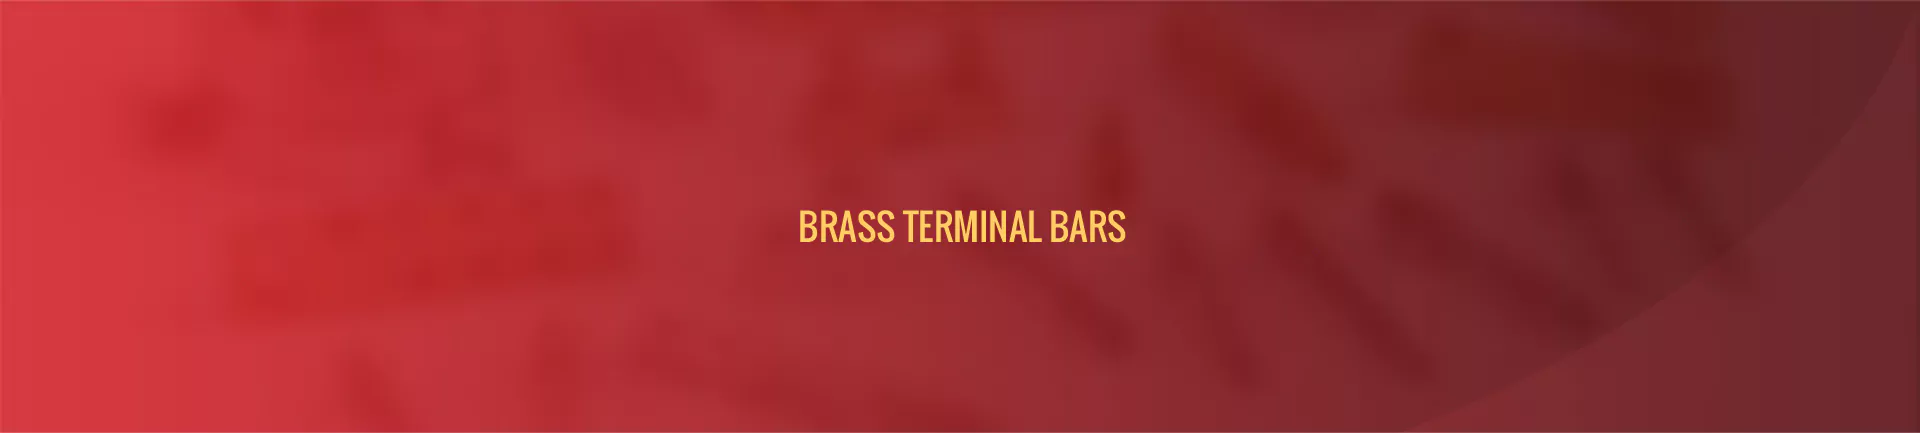 brass-terminals-bars-banner